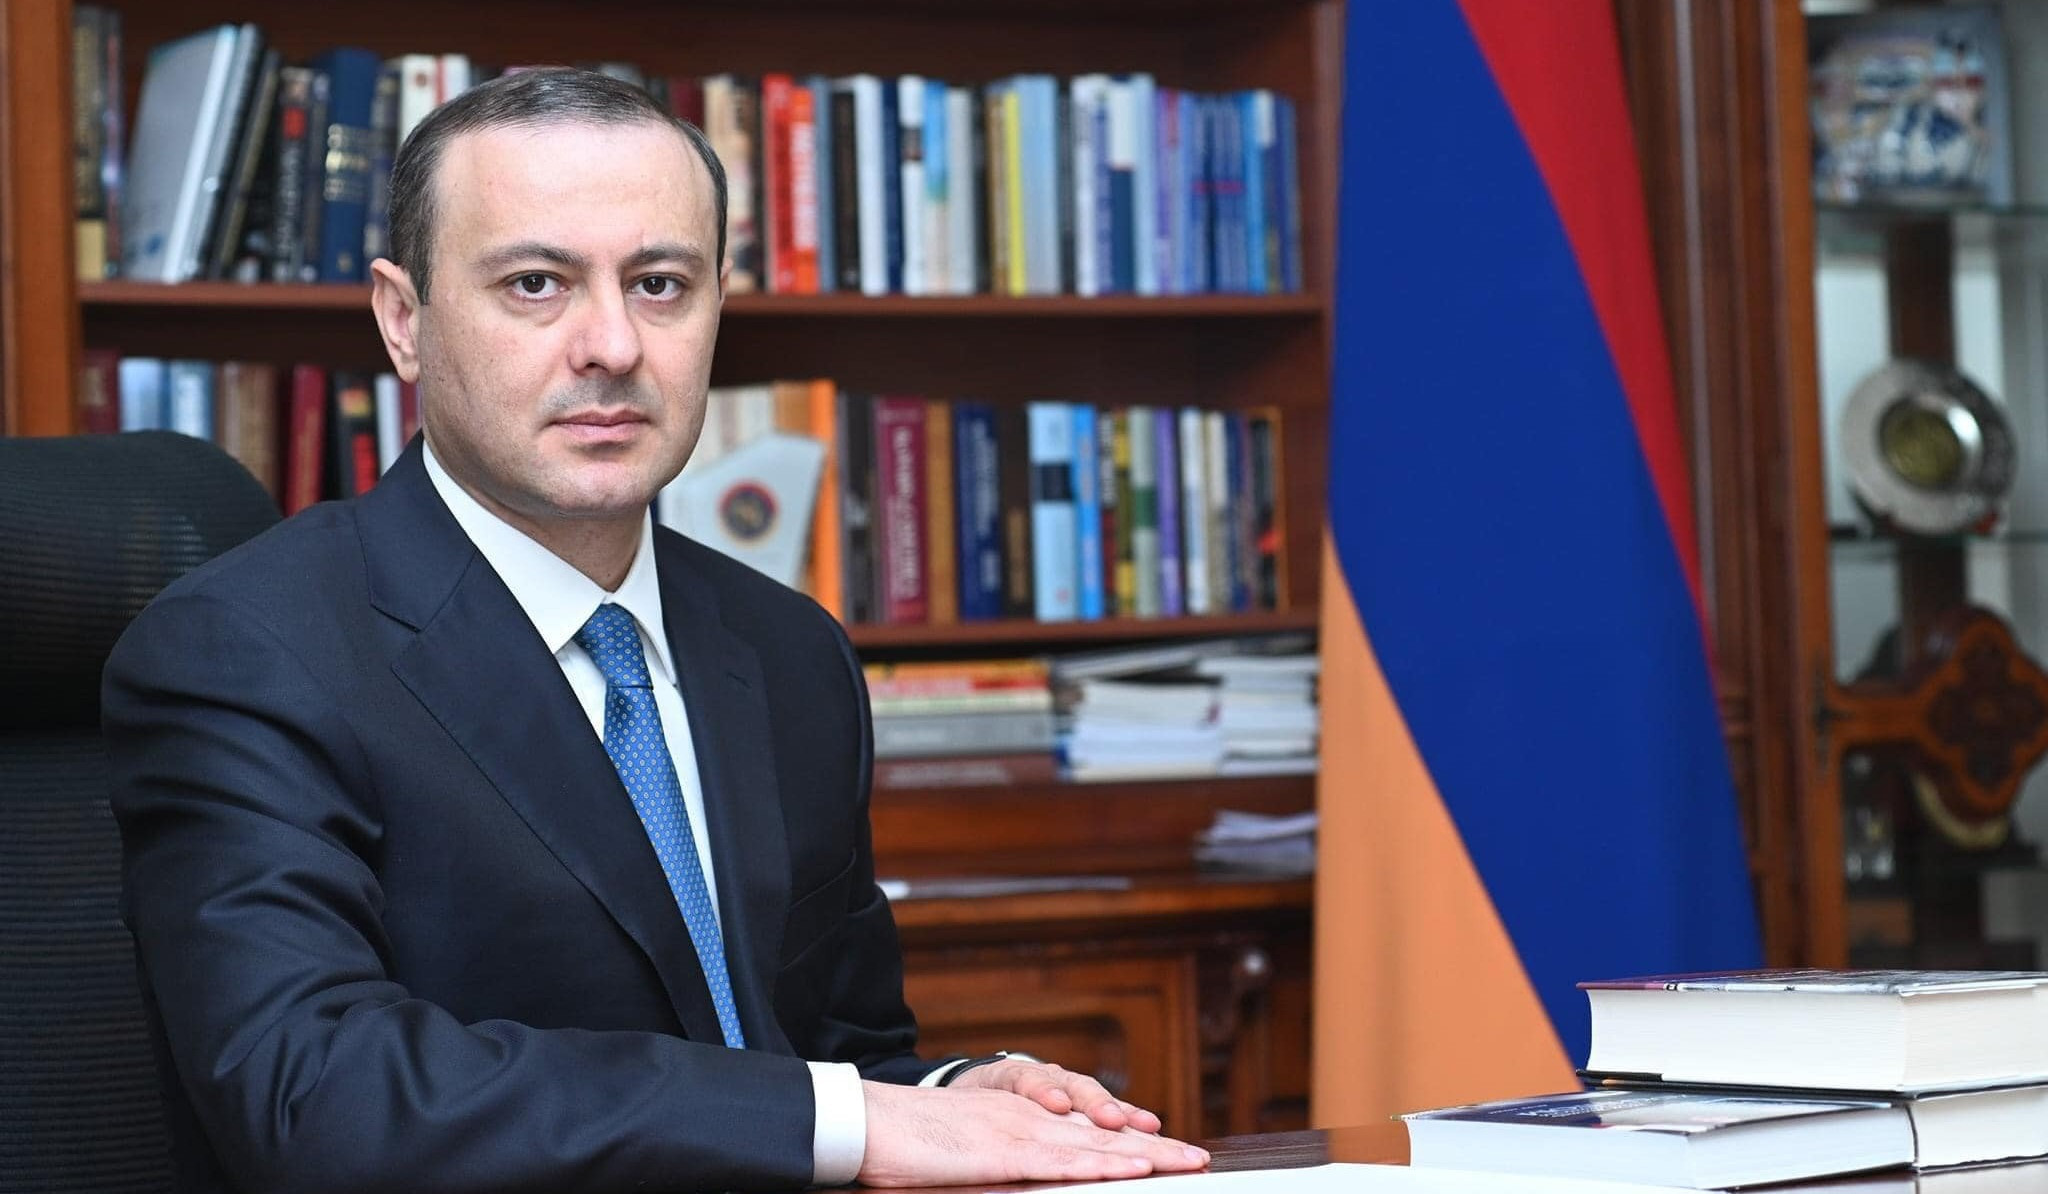 Armen Grigroyan briefs USAID’s Samantha Power on humanitarian crisis in Nagorno-Karabakh